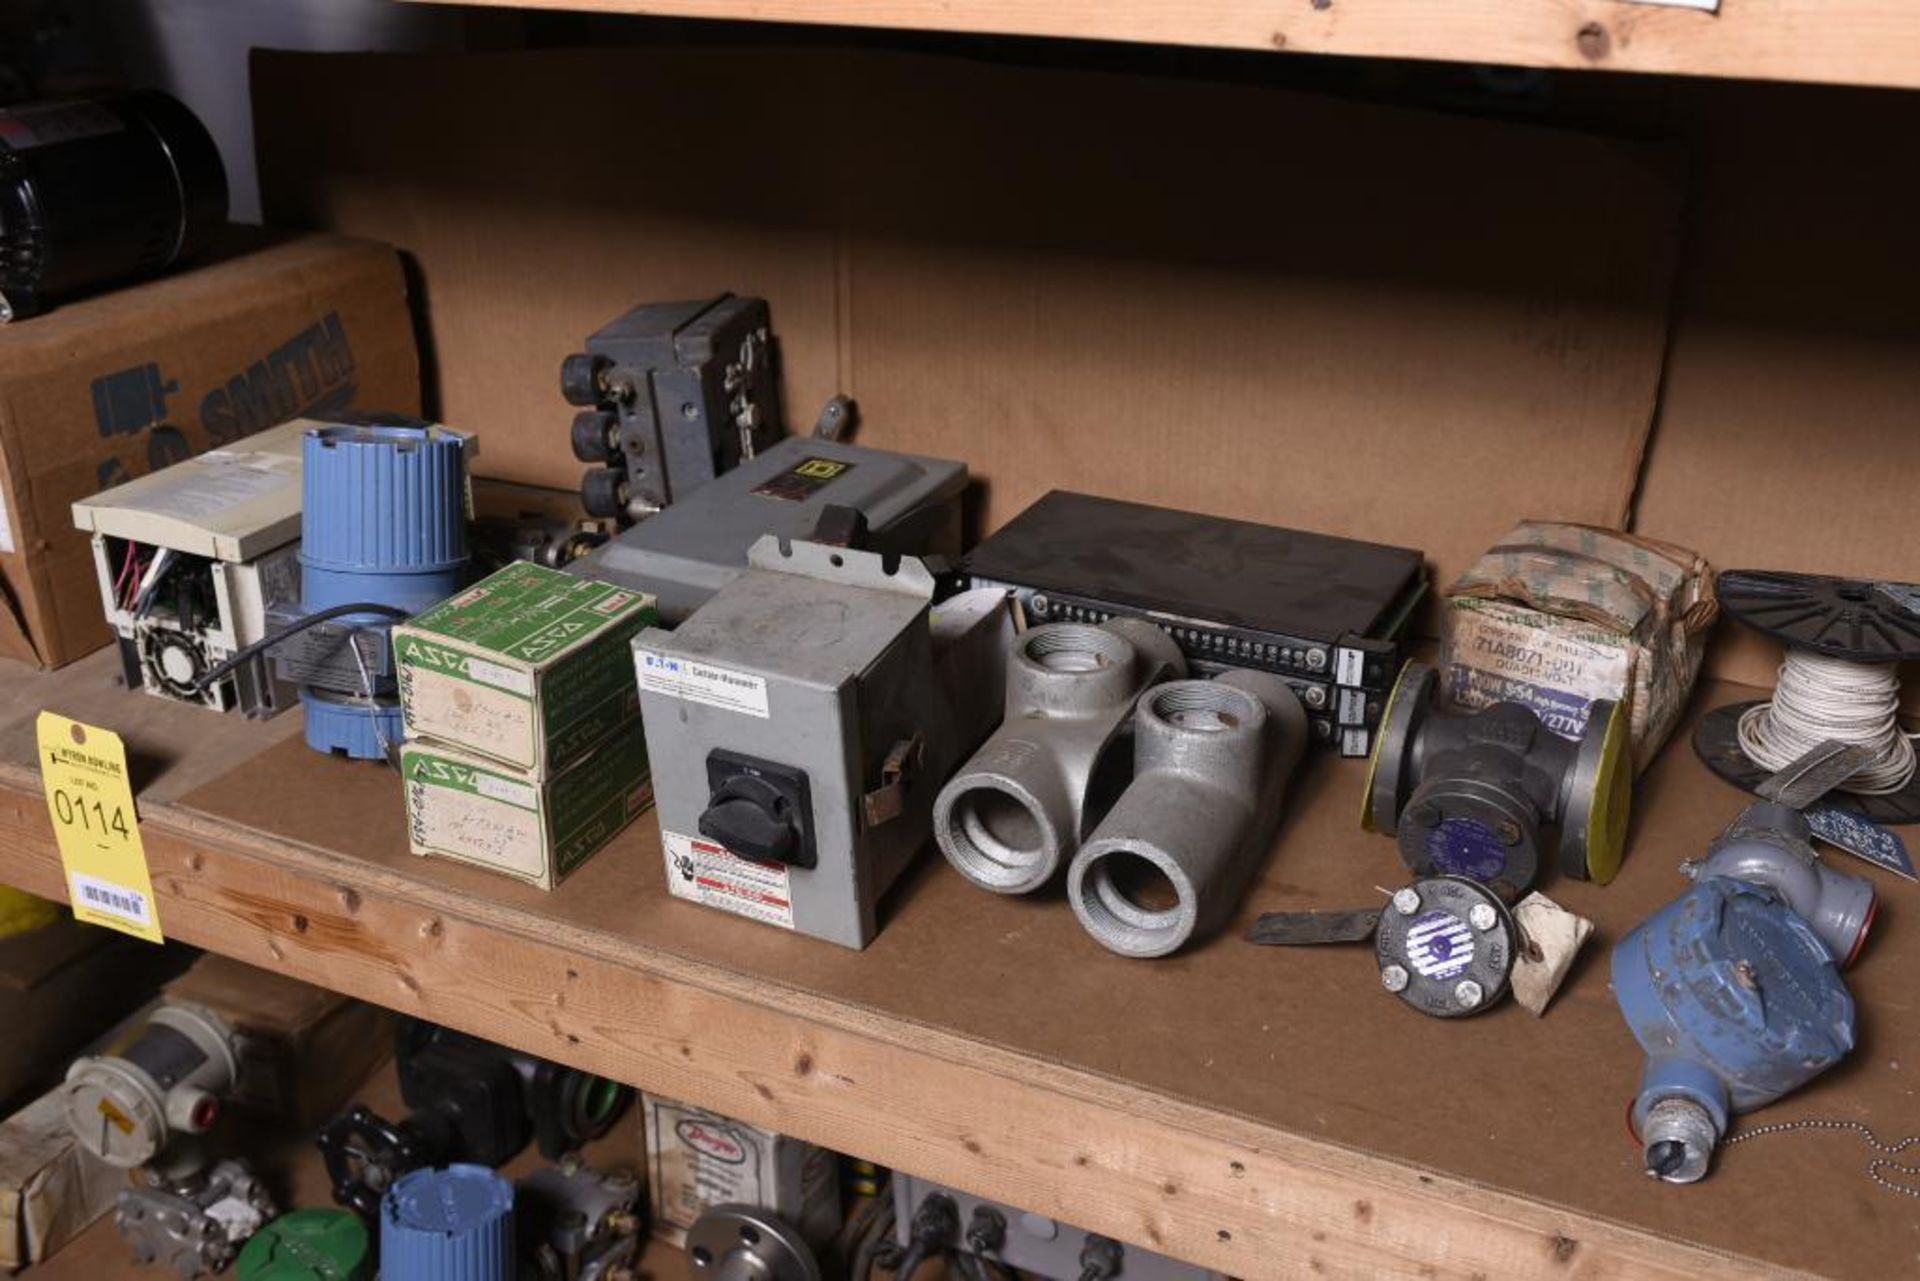 Shelf of Miscellaneous MRO, Valves, Electrical, Motors, Indicators, Pumps (Rosemount, Square D, Kunk - Image 2 of 3